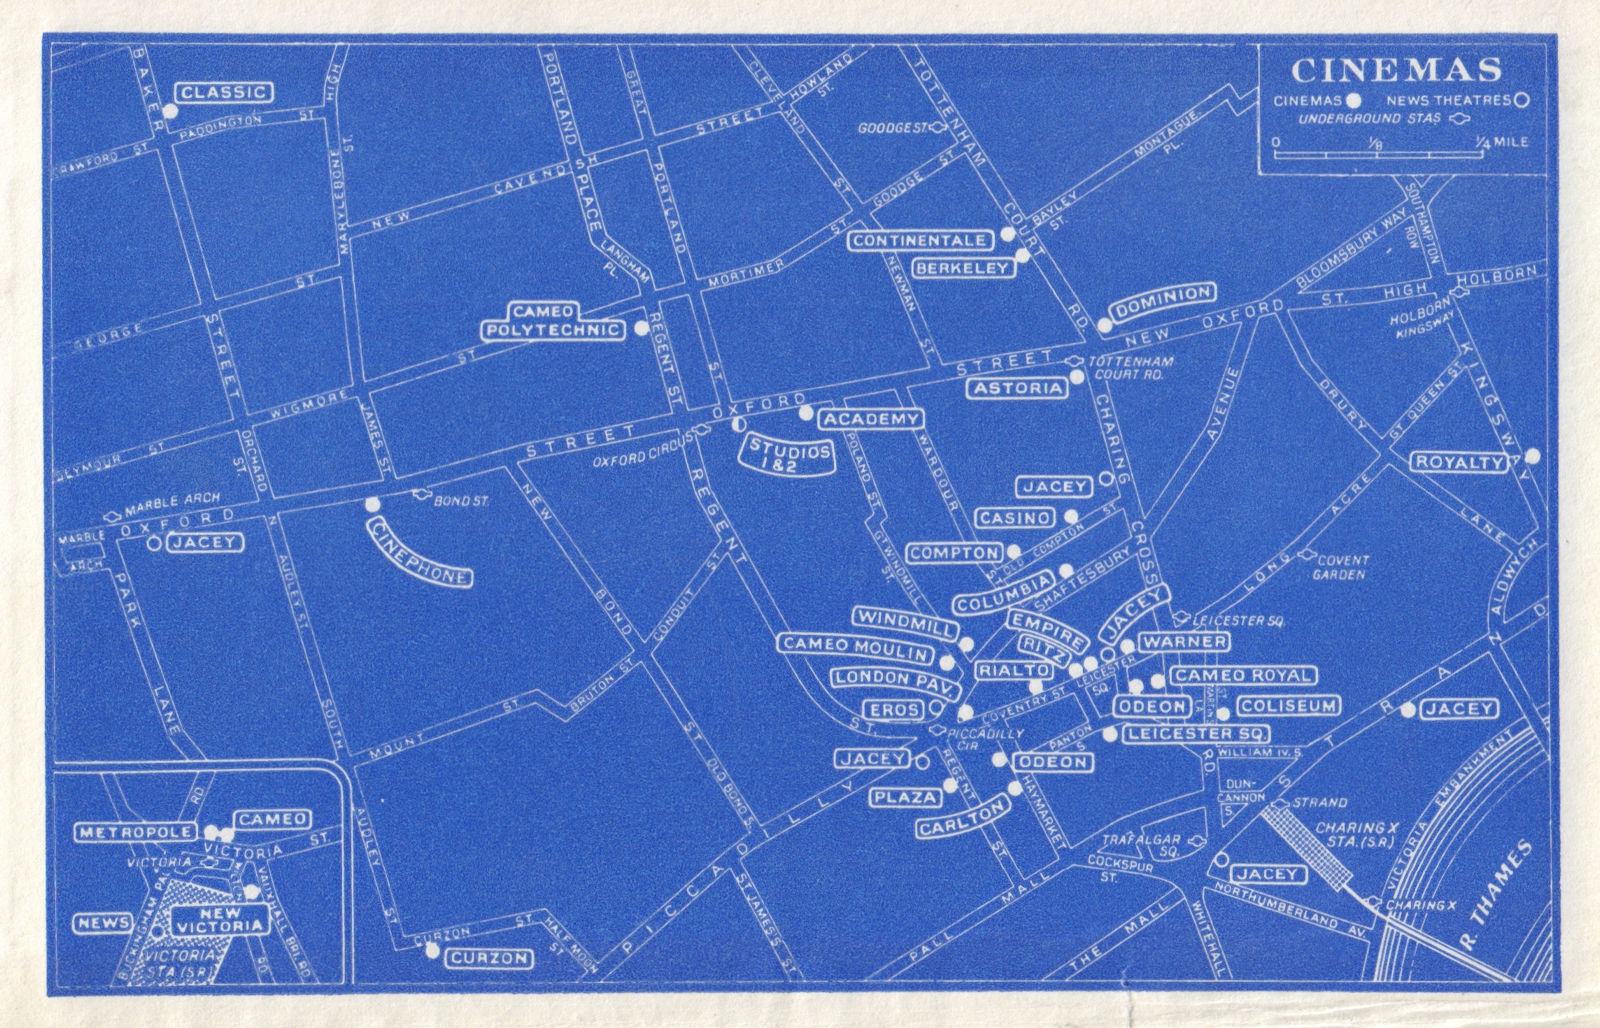 LONDON WEST END CINEMAS & NEWS THEATRES Jacey Cinephone Eros Ritz Odeon 1965 map